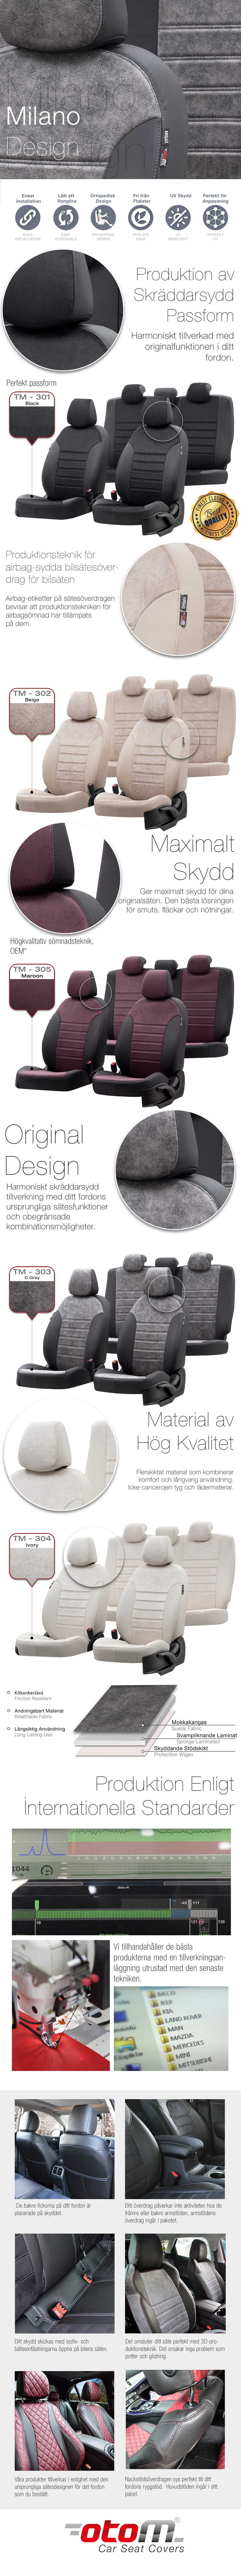 Milano design seat covers